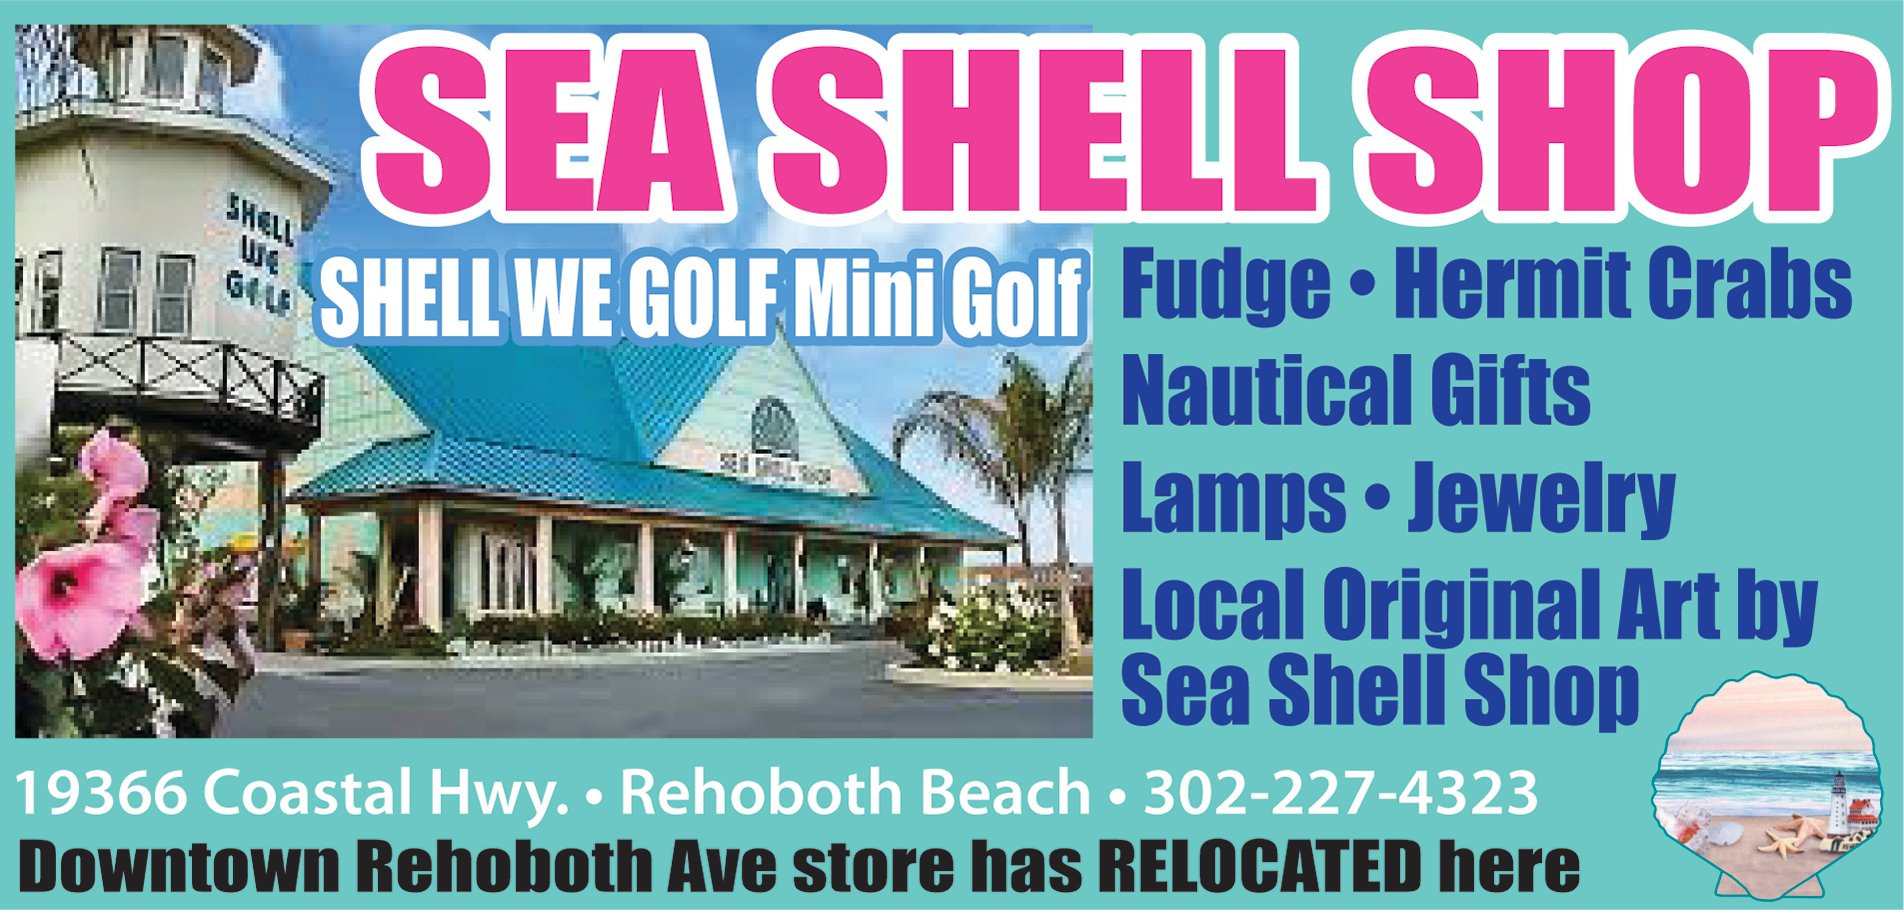 Sea Shell Shop Shell We Golf Print Ad